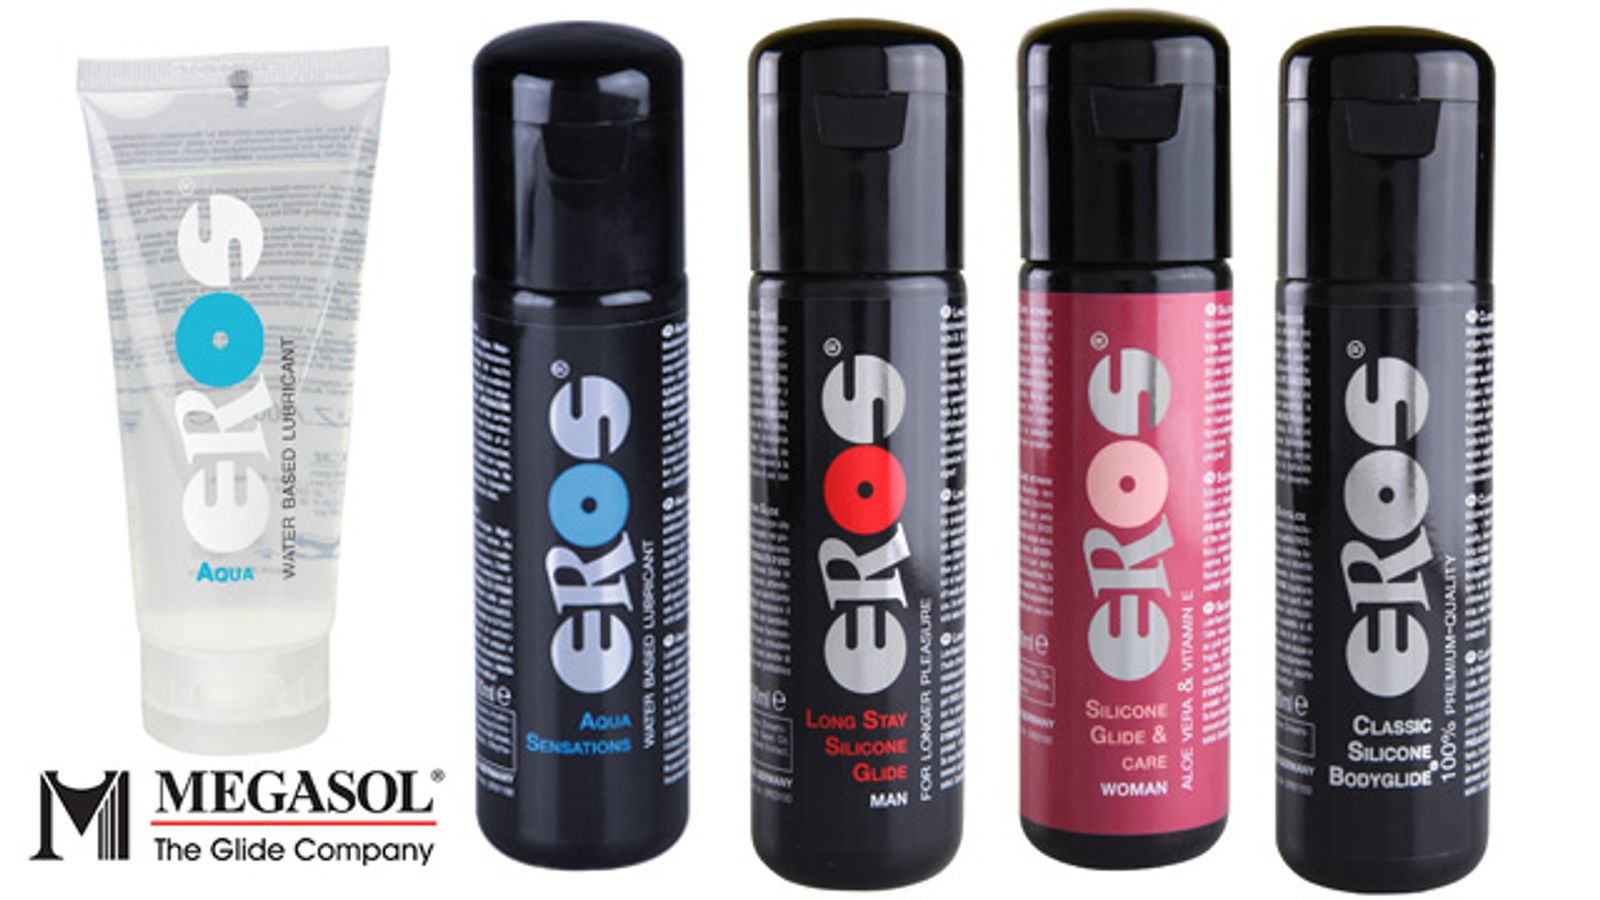 Megasol USA Launches New Eros Formulas, Packaging